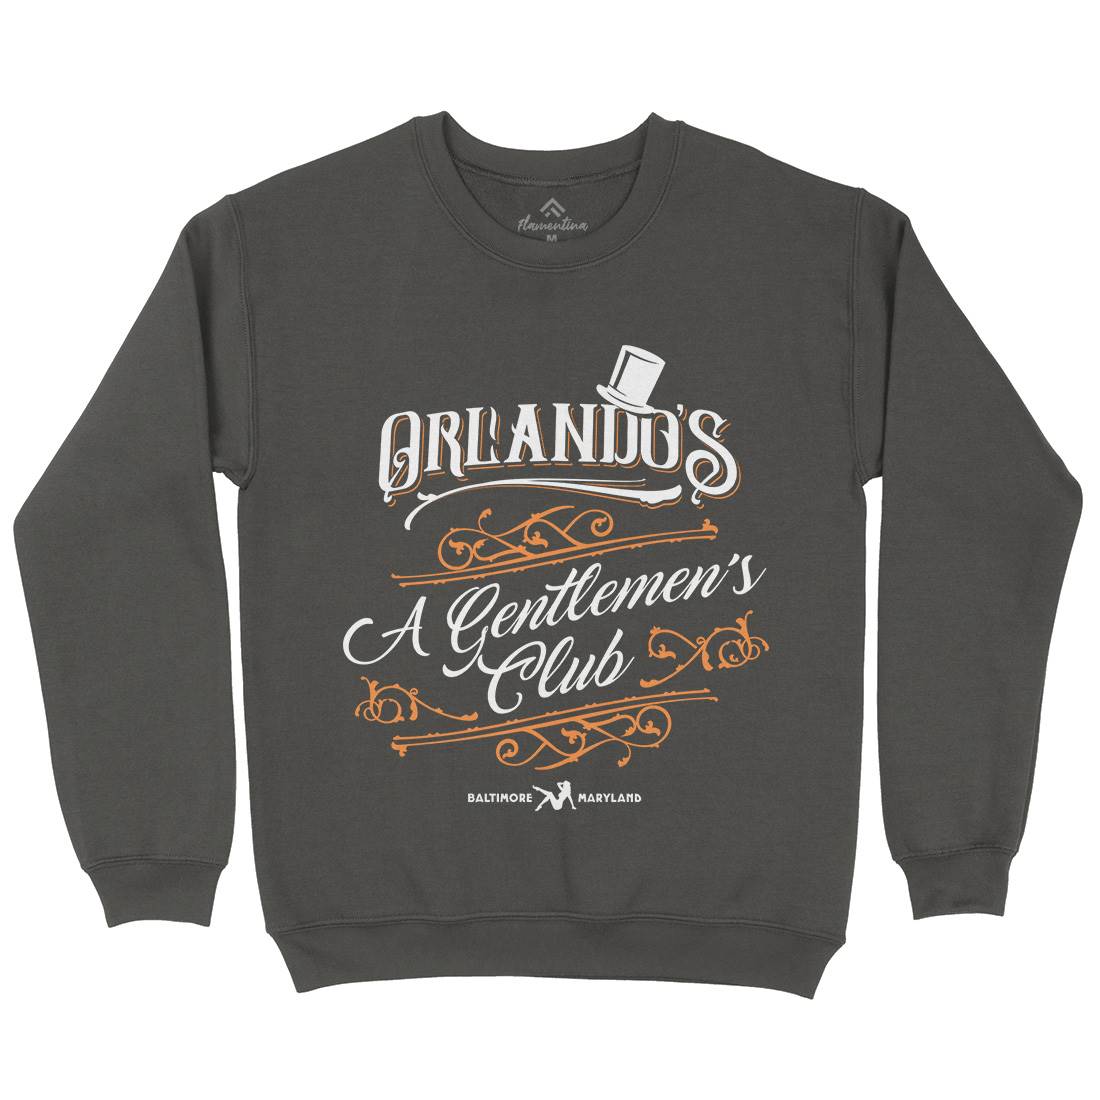 Orlandos Club Kids Crew Neck Sweatshirt Drinks D173